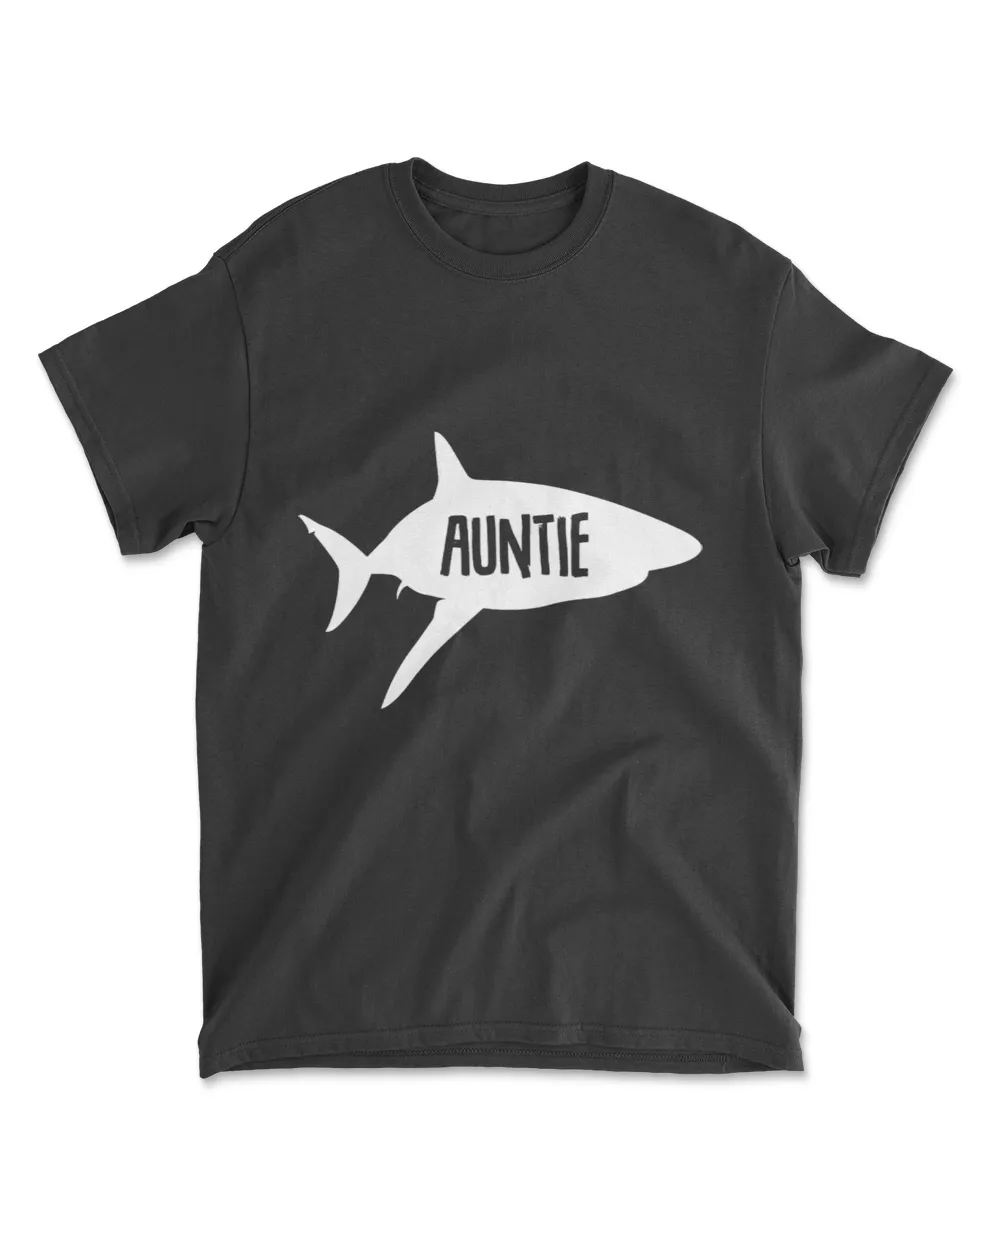 Aunt Shark Doo Doo Doo Auntie Shark Doo Doo Shirt Gift T-Shirt